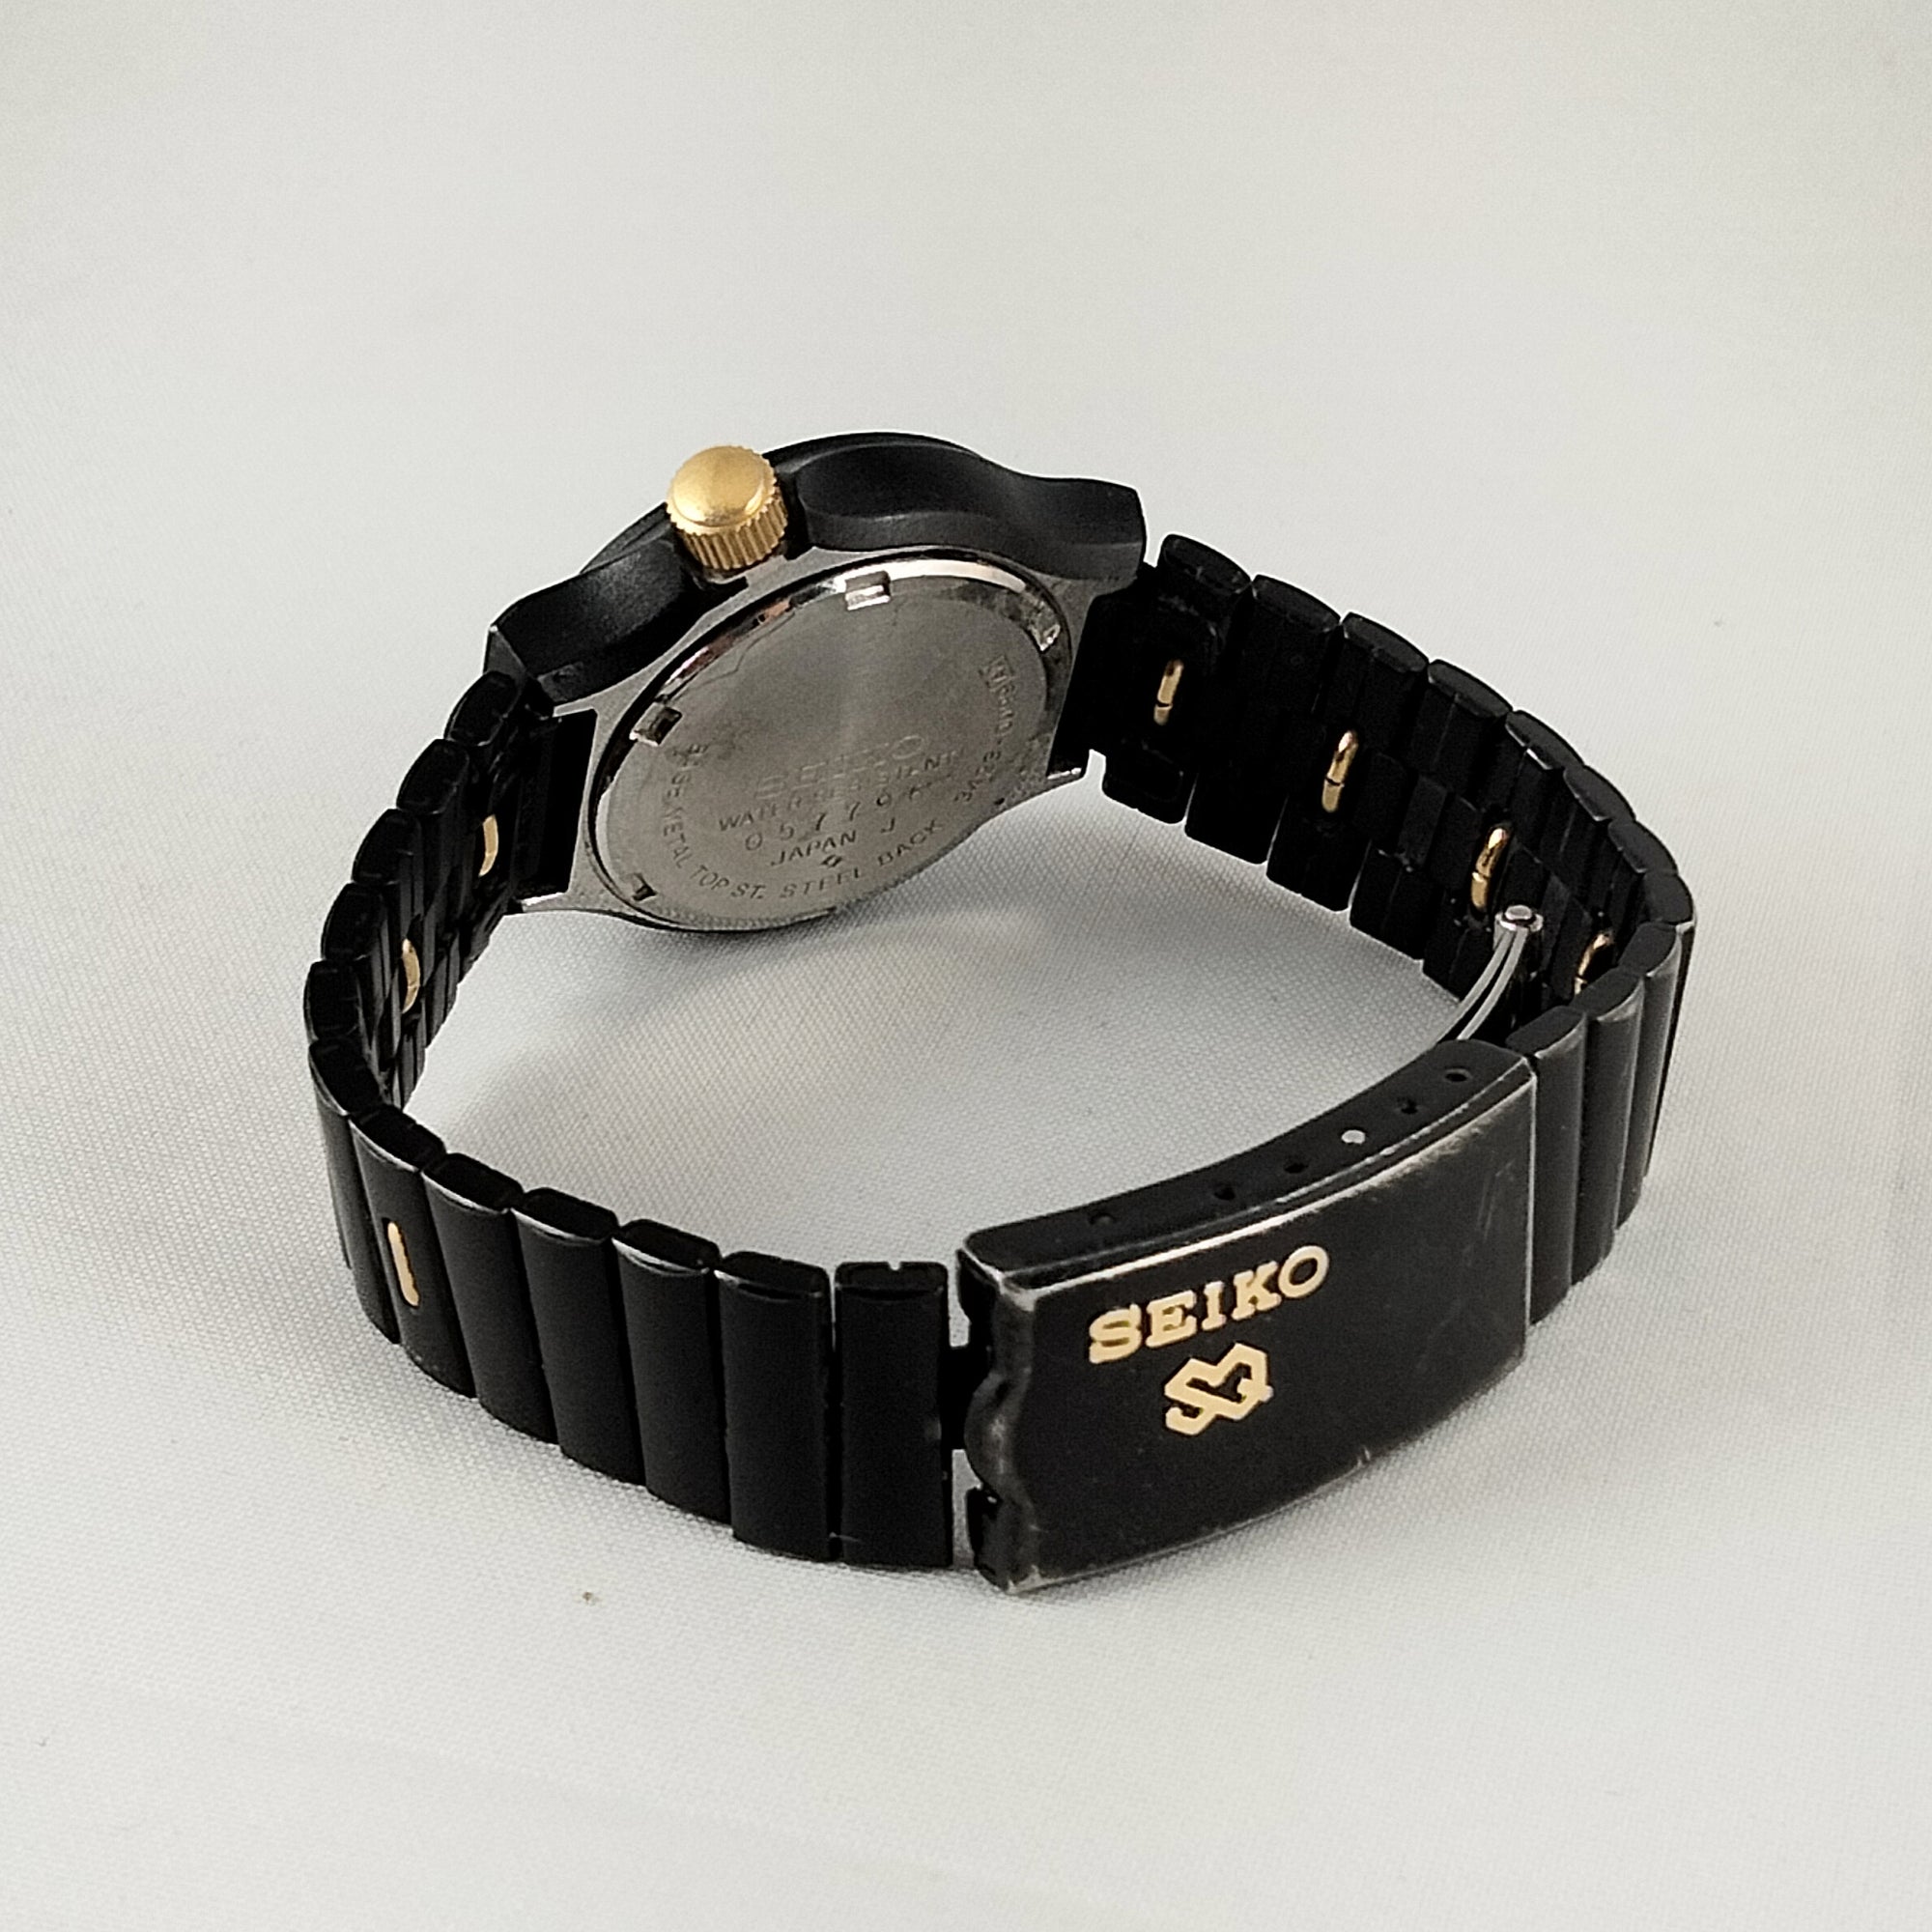 Seiko Quartz Sports Watch, Black Dial and Strap, Gold Tone Details